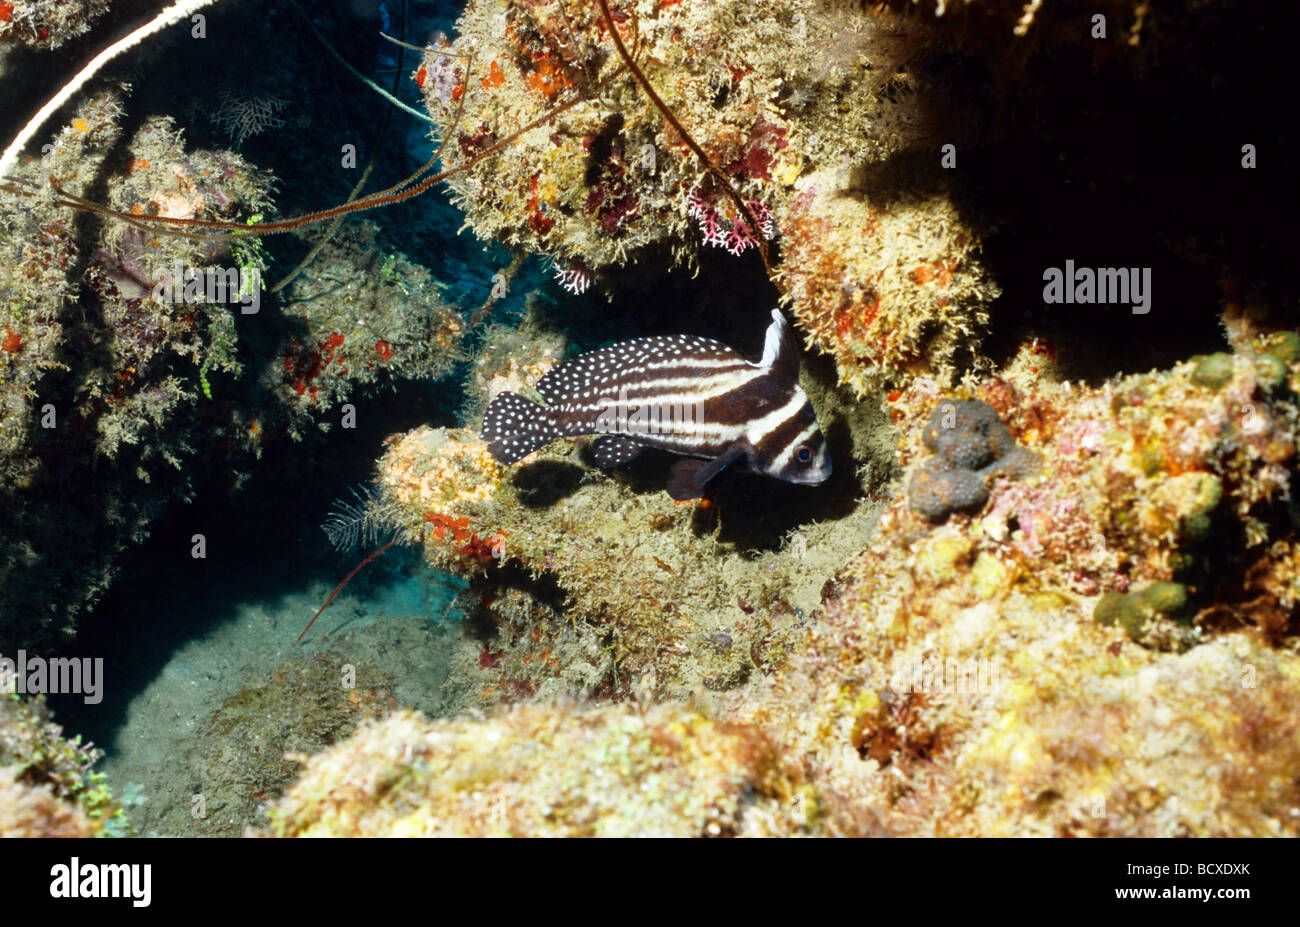 Amazing underwater marine life of Grenada, West Indies. Adult spotted drum, fish. Grenada underwater reef scene. Stock Photo